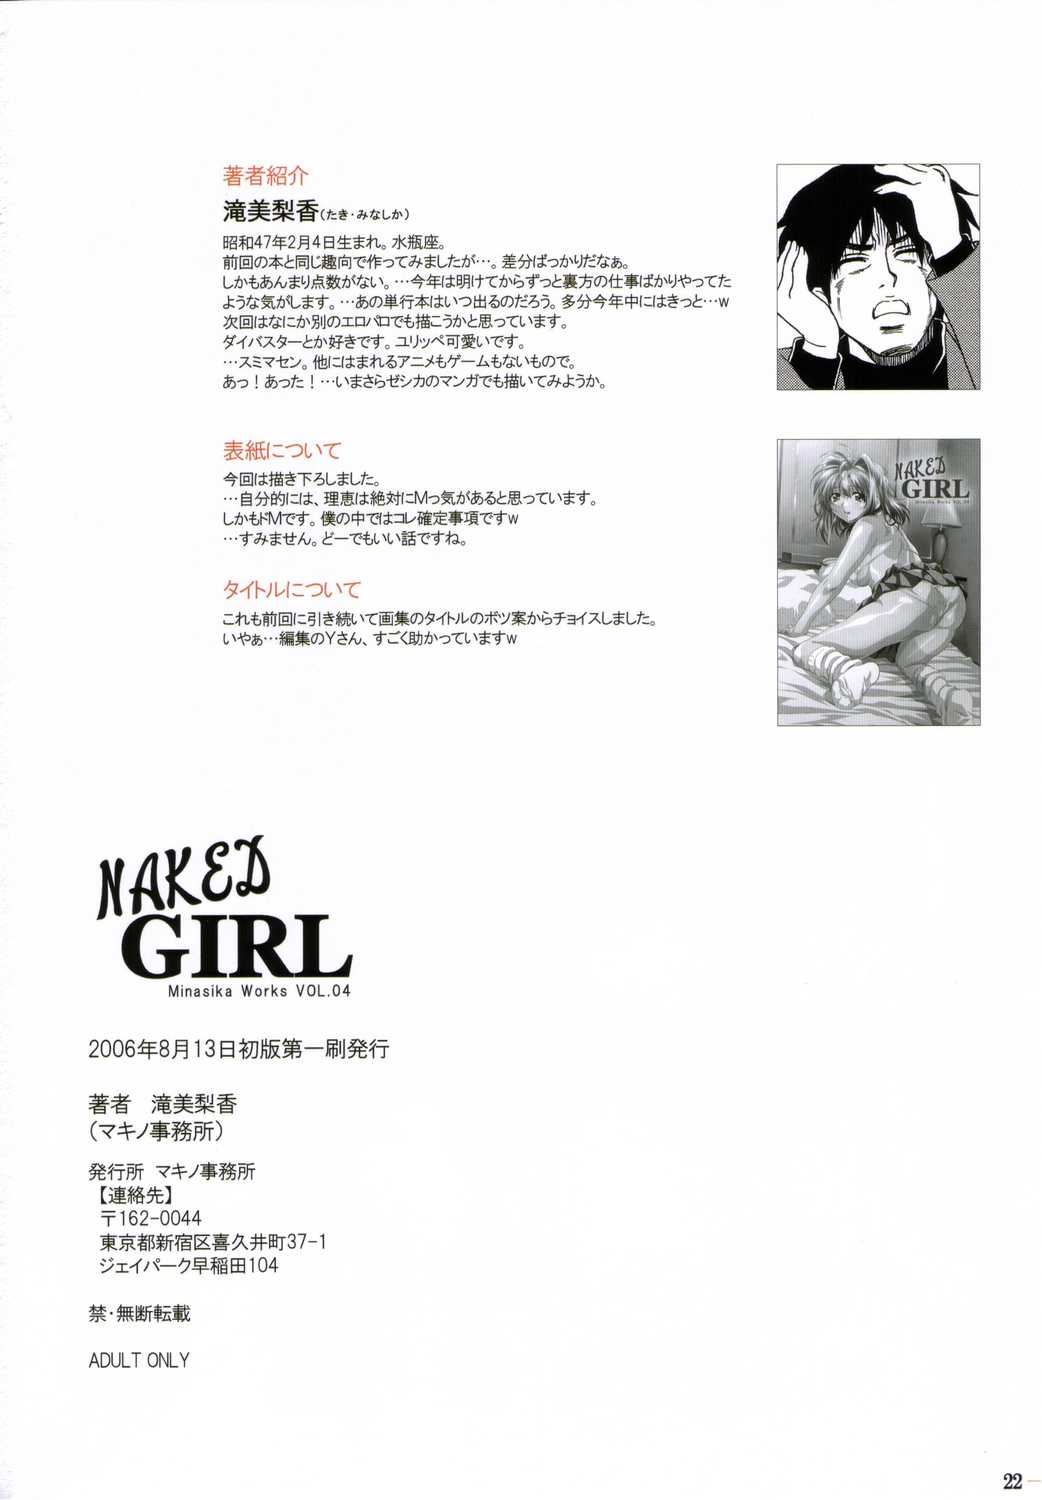 [Makino Jimusho] MINASHIKA WORKS 04 NAKED GIRL [マキノ事務所] 04 NAKED GIRL